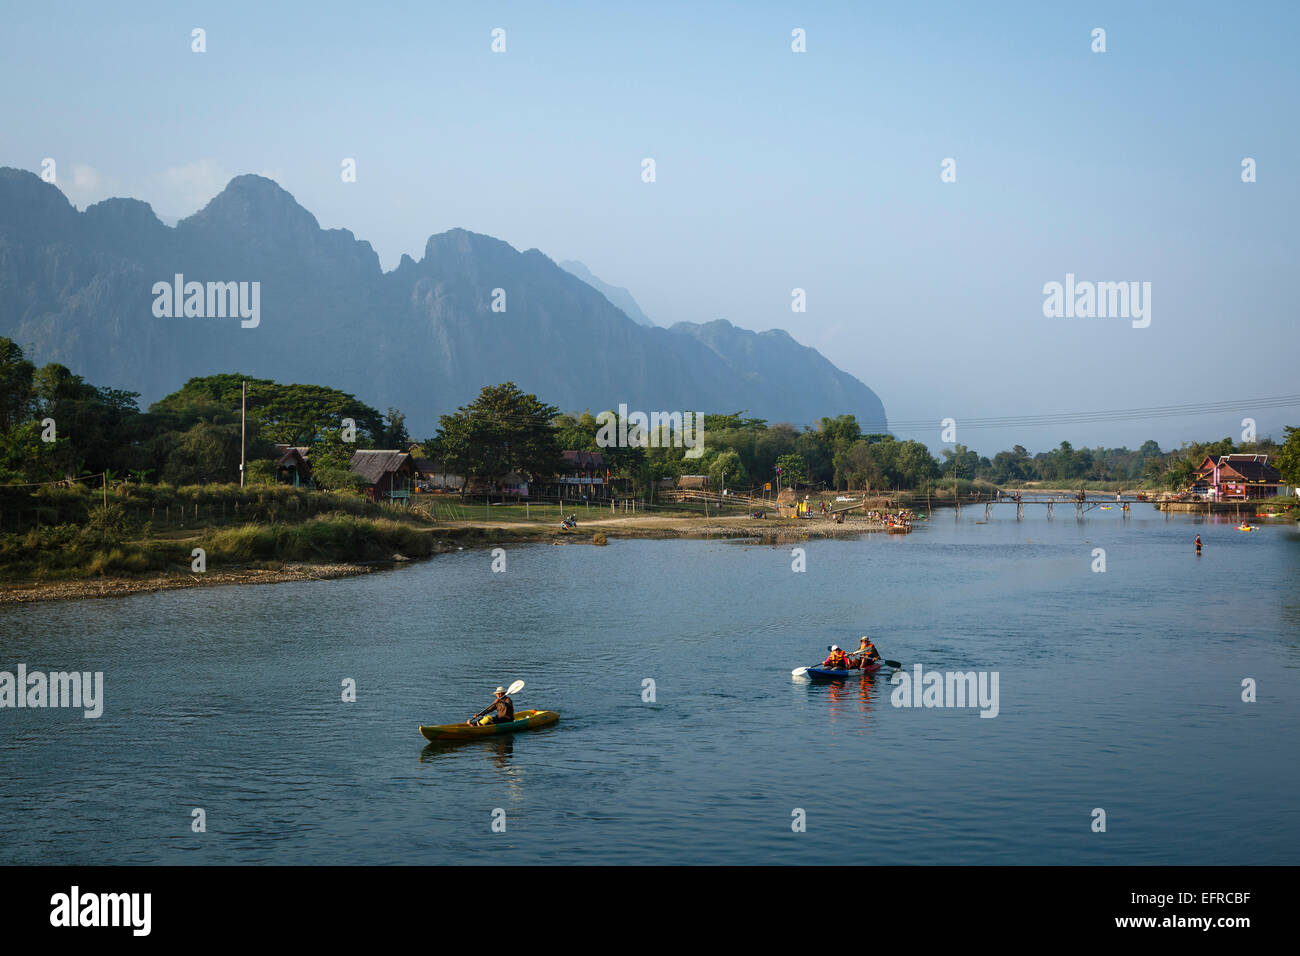 People kayaking at Nam Song river, Vang Vieng, Laos. Stock Photo